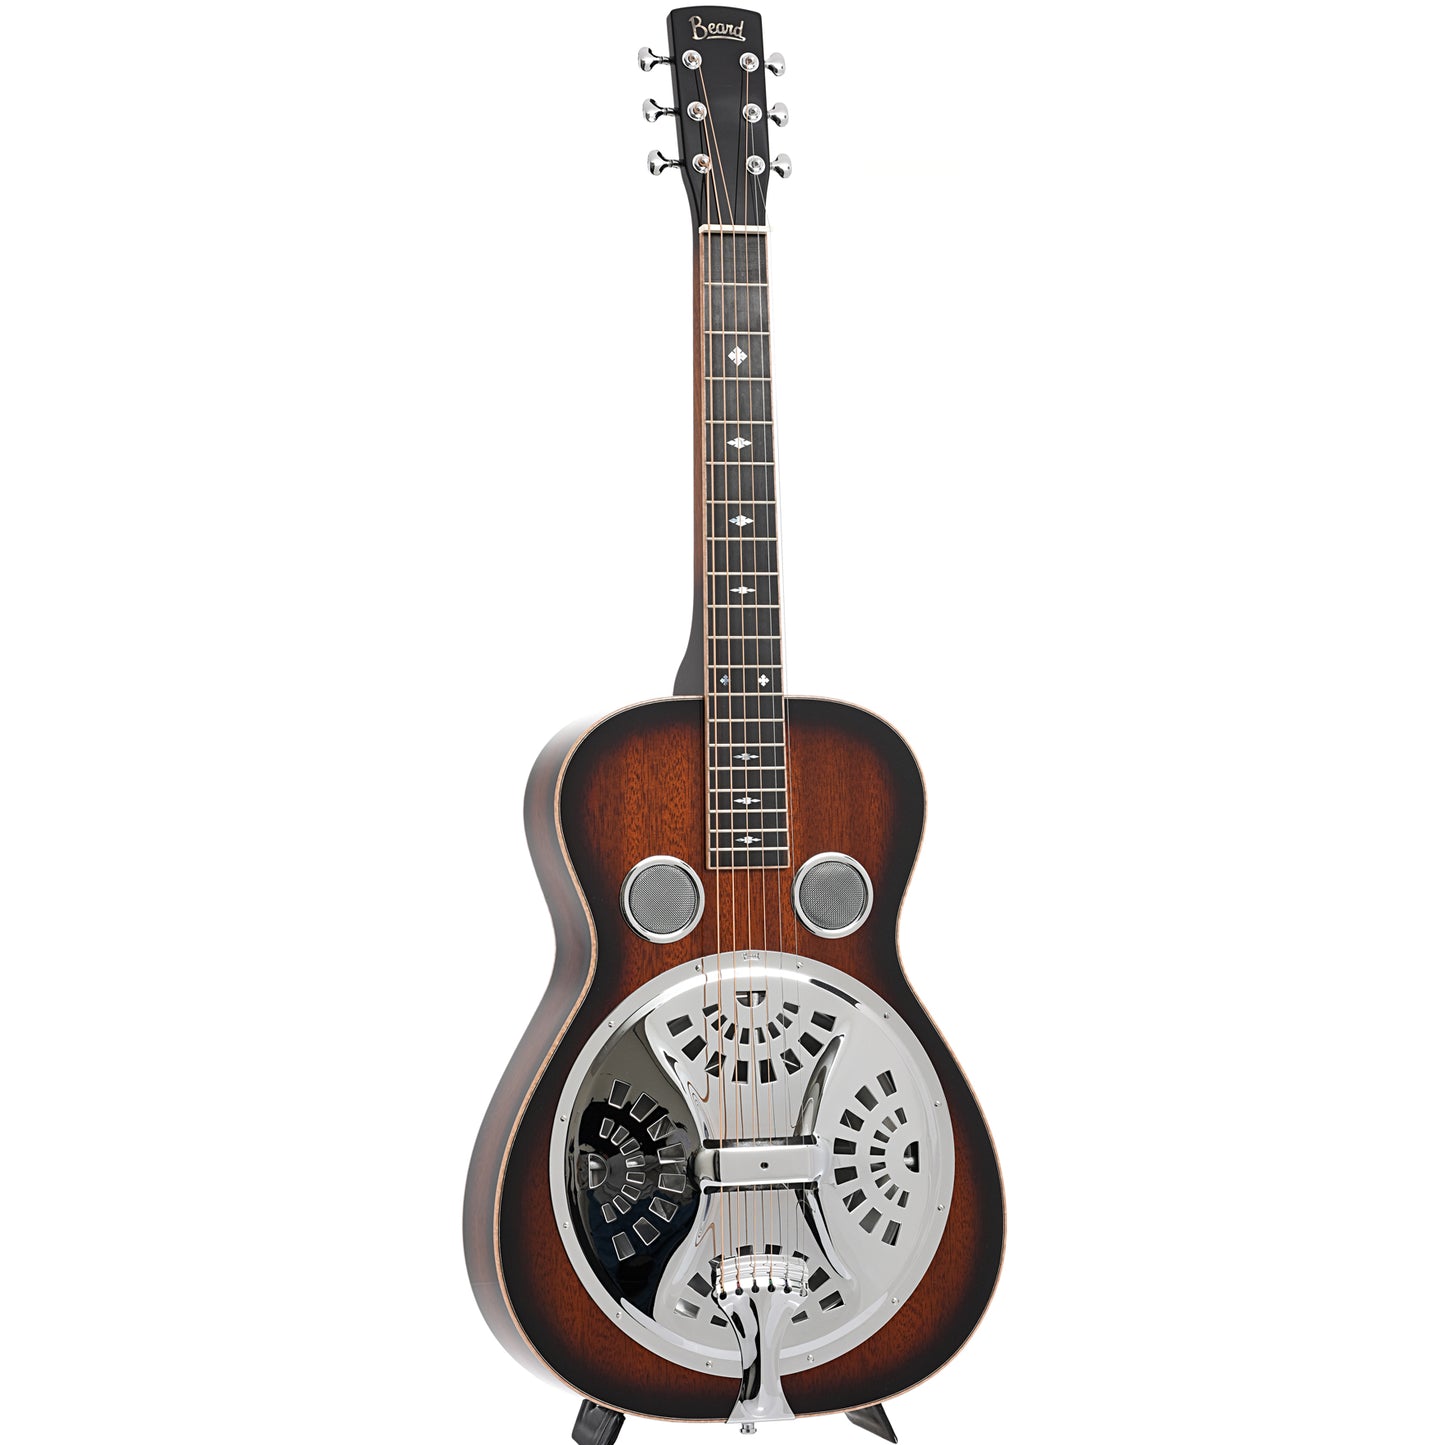 Full front and side of Beard Standard R Model Squareneck Resonator Guitar with Fishman Nashville Pickup